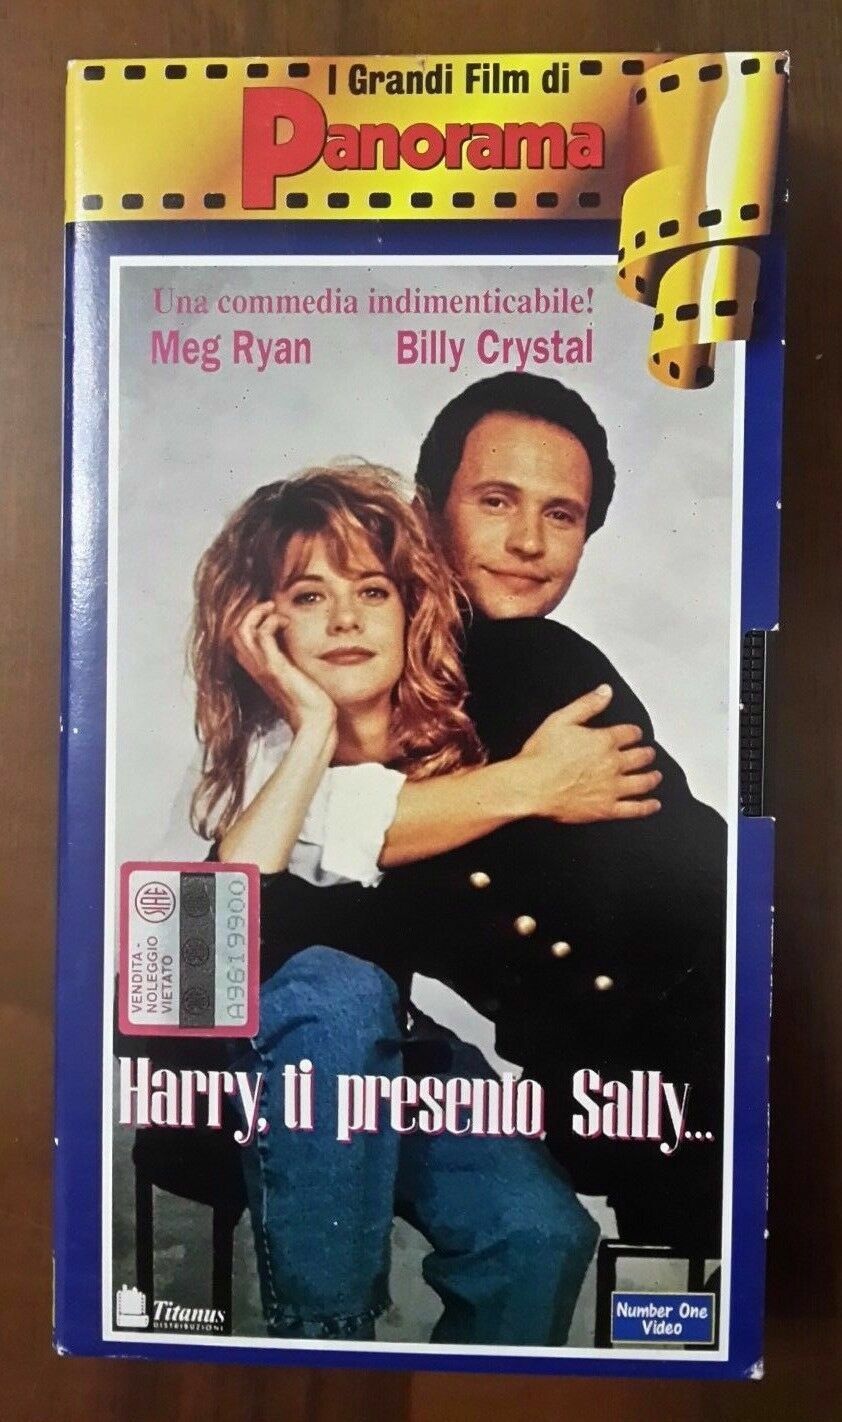 Harry ti presento Sally - Film VHS anno 1993 - Panorama -F